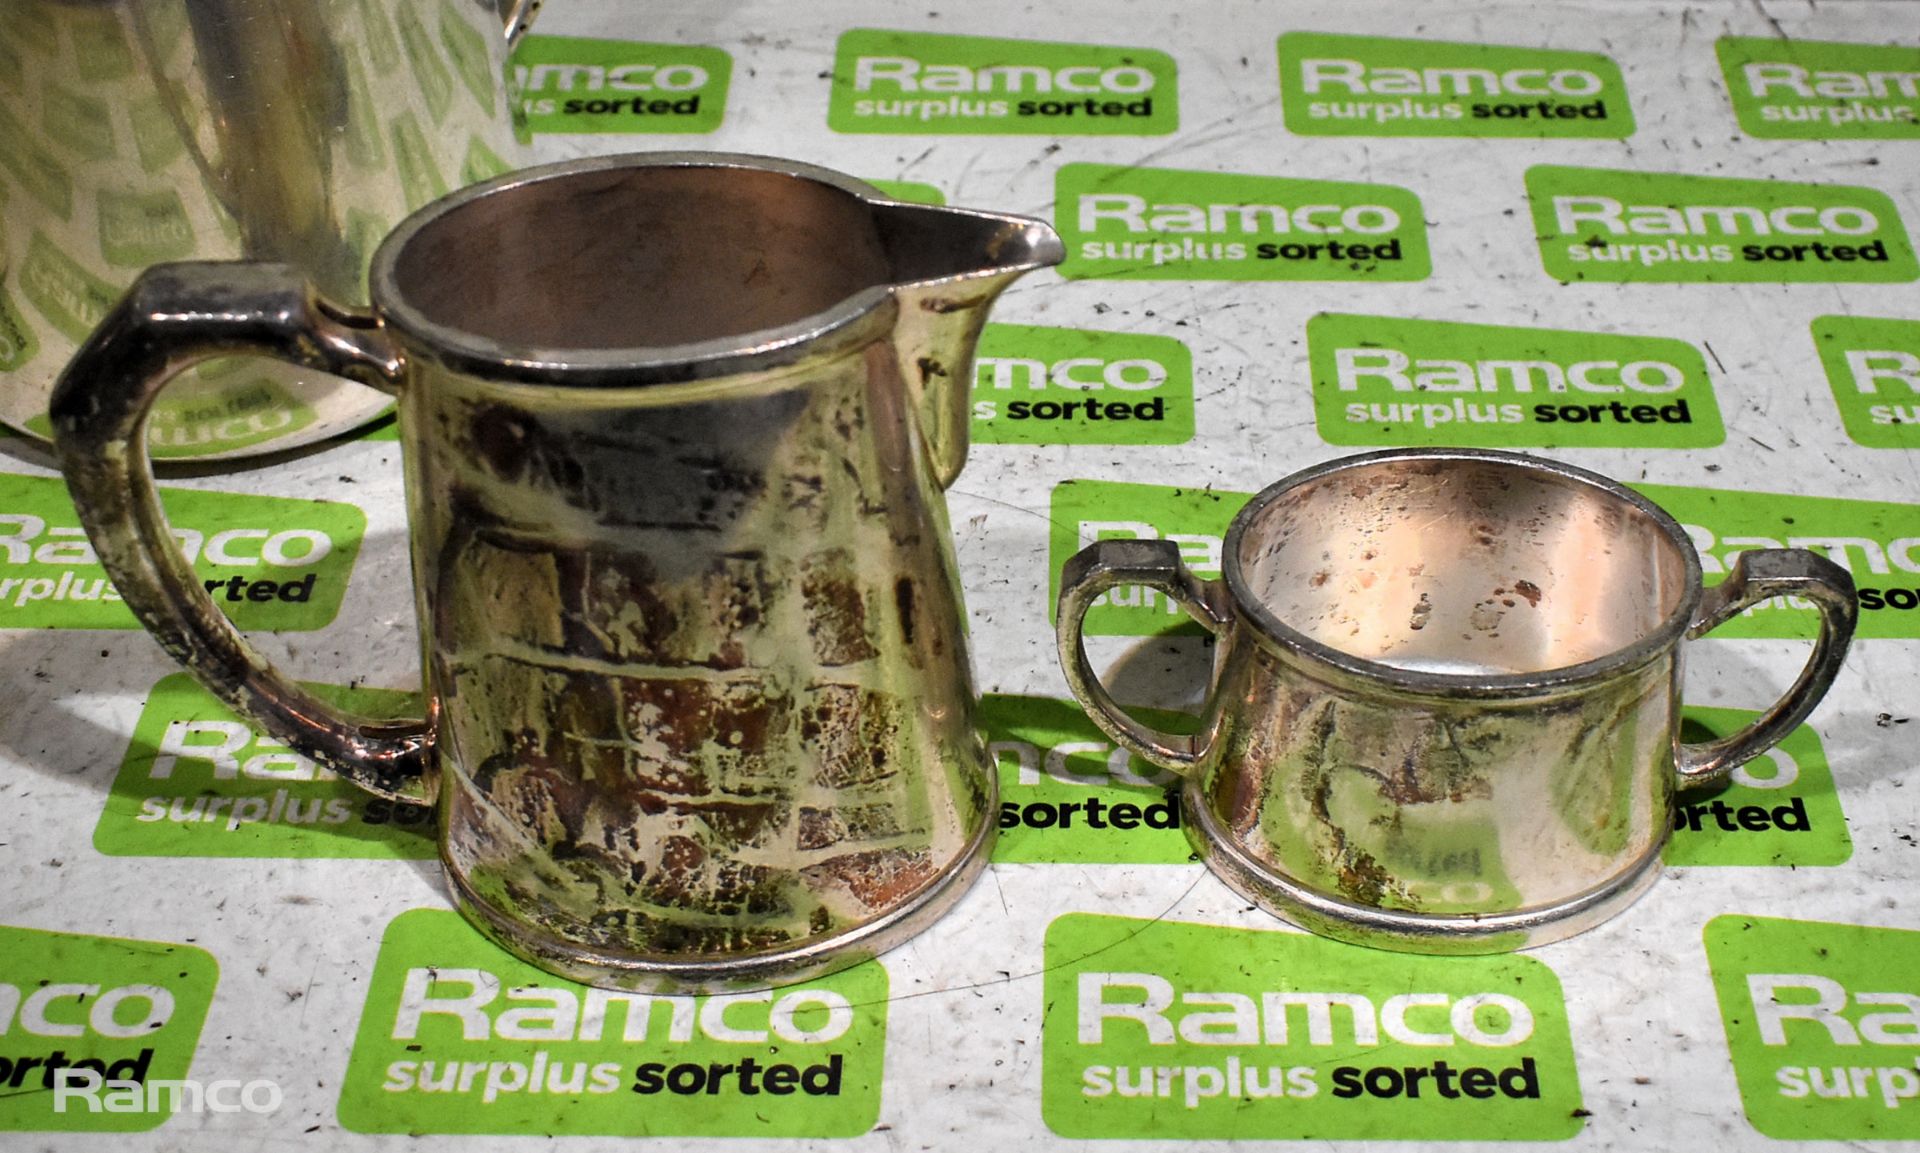 28x EPNS 3 pint teapots, 11x EPNS Milk jugs - 1/2 pint, 3x EPNS Sugar bowls - Image 5 of 5